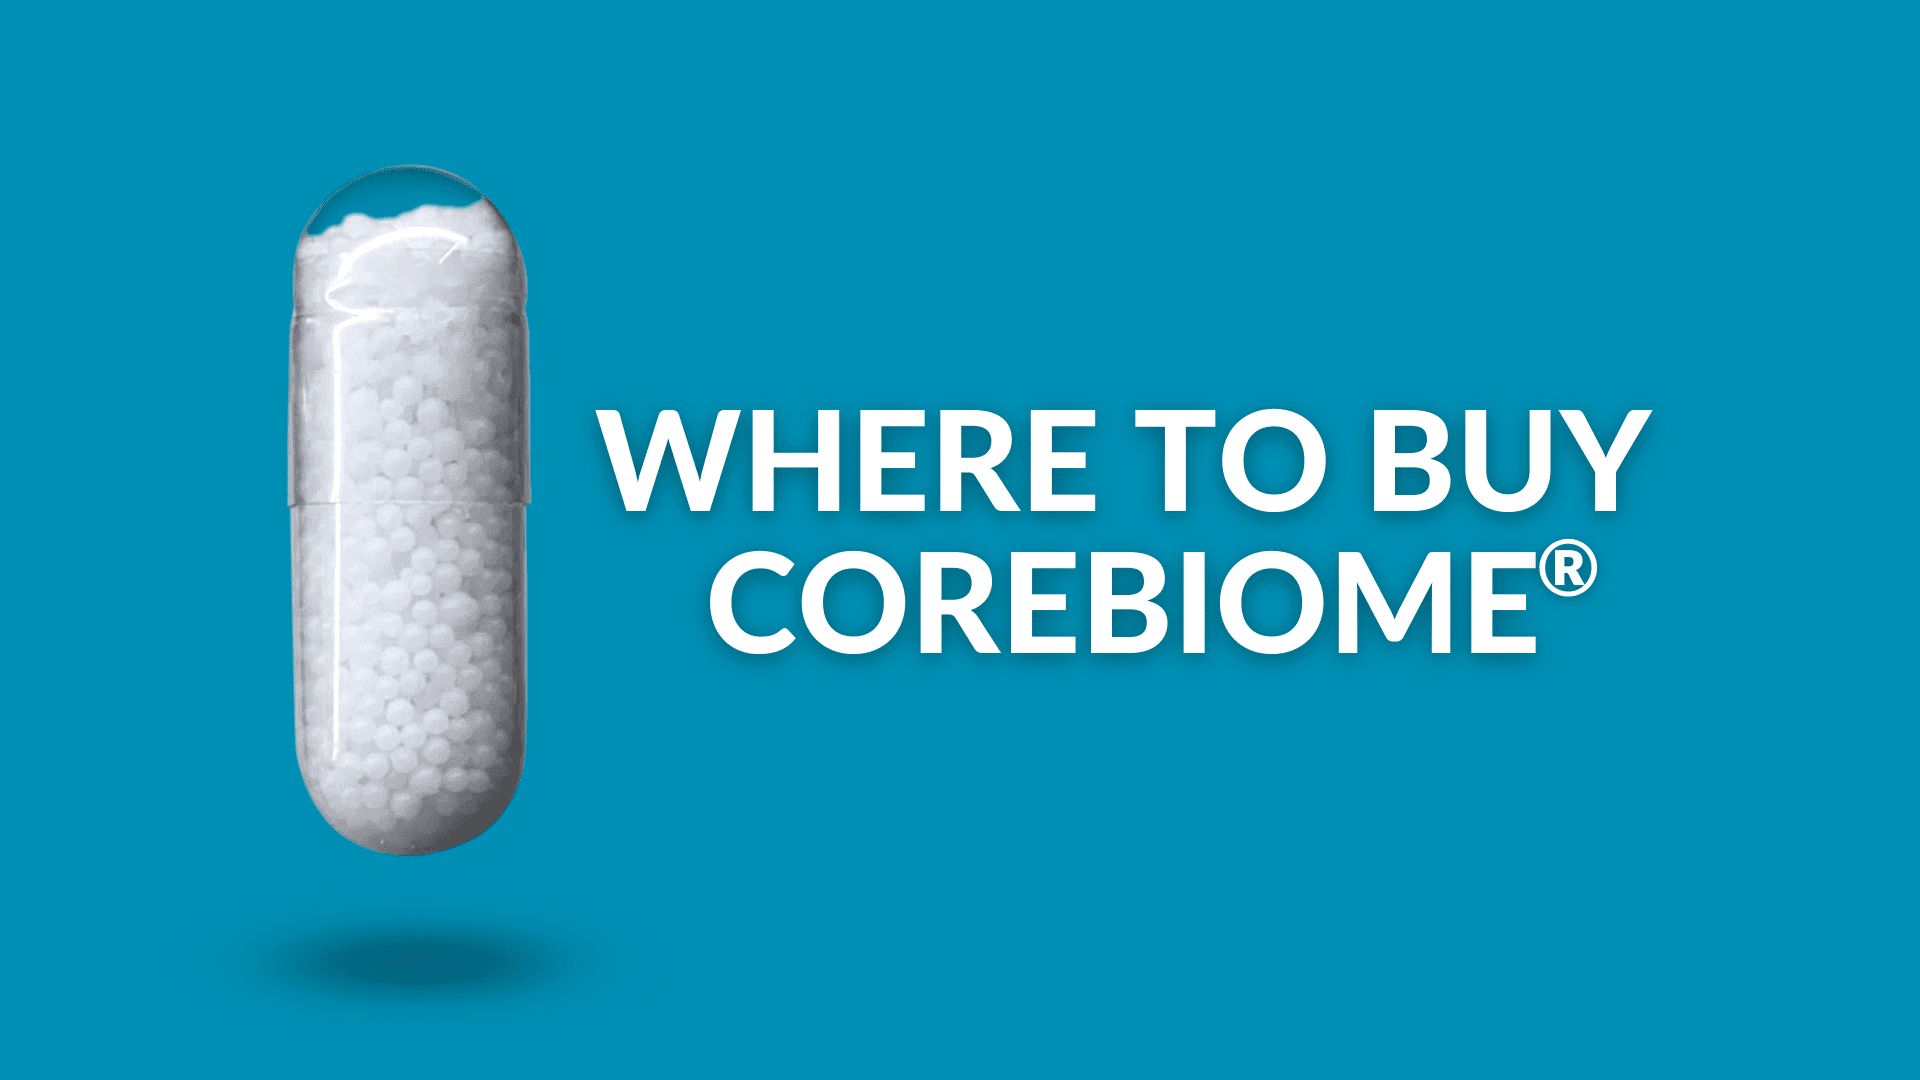 Where to Buy CoreBiome®